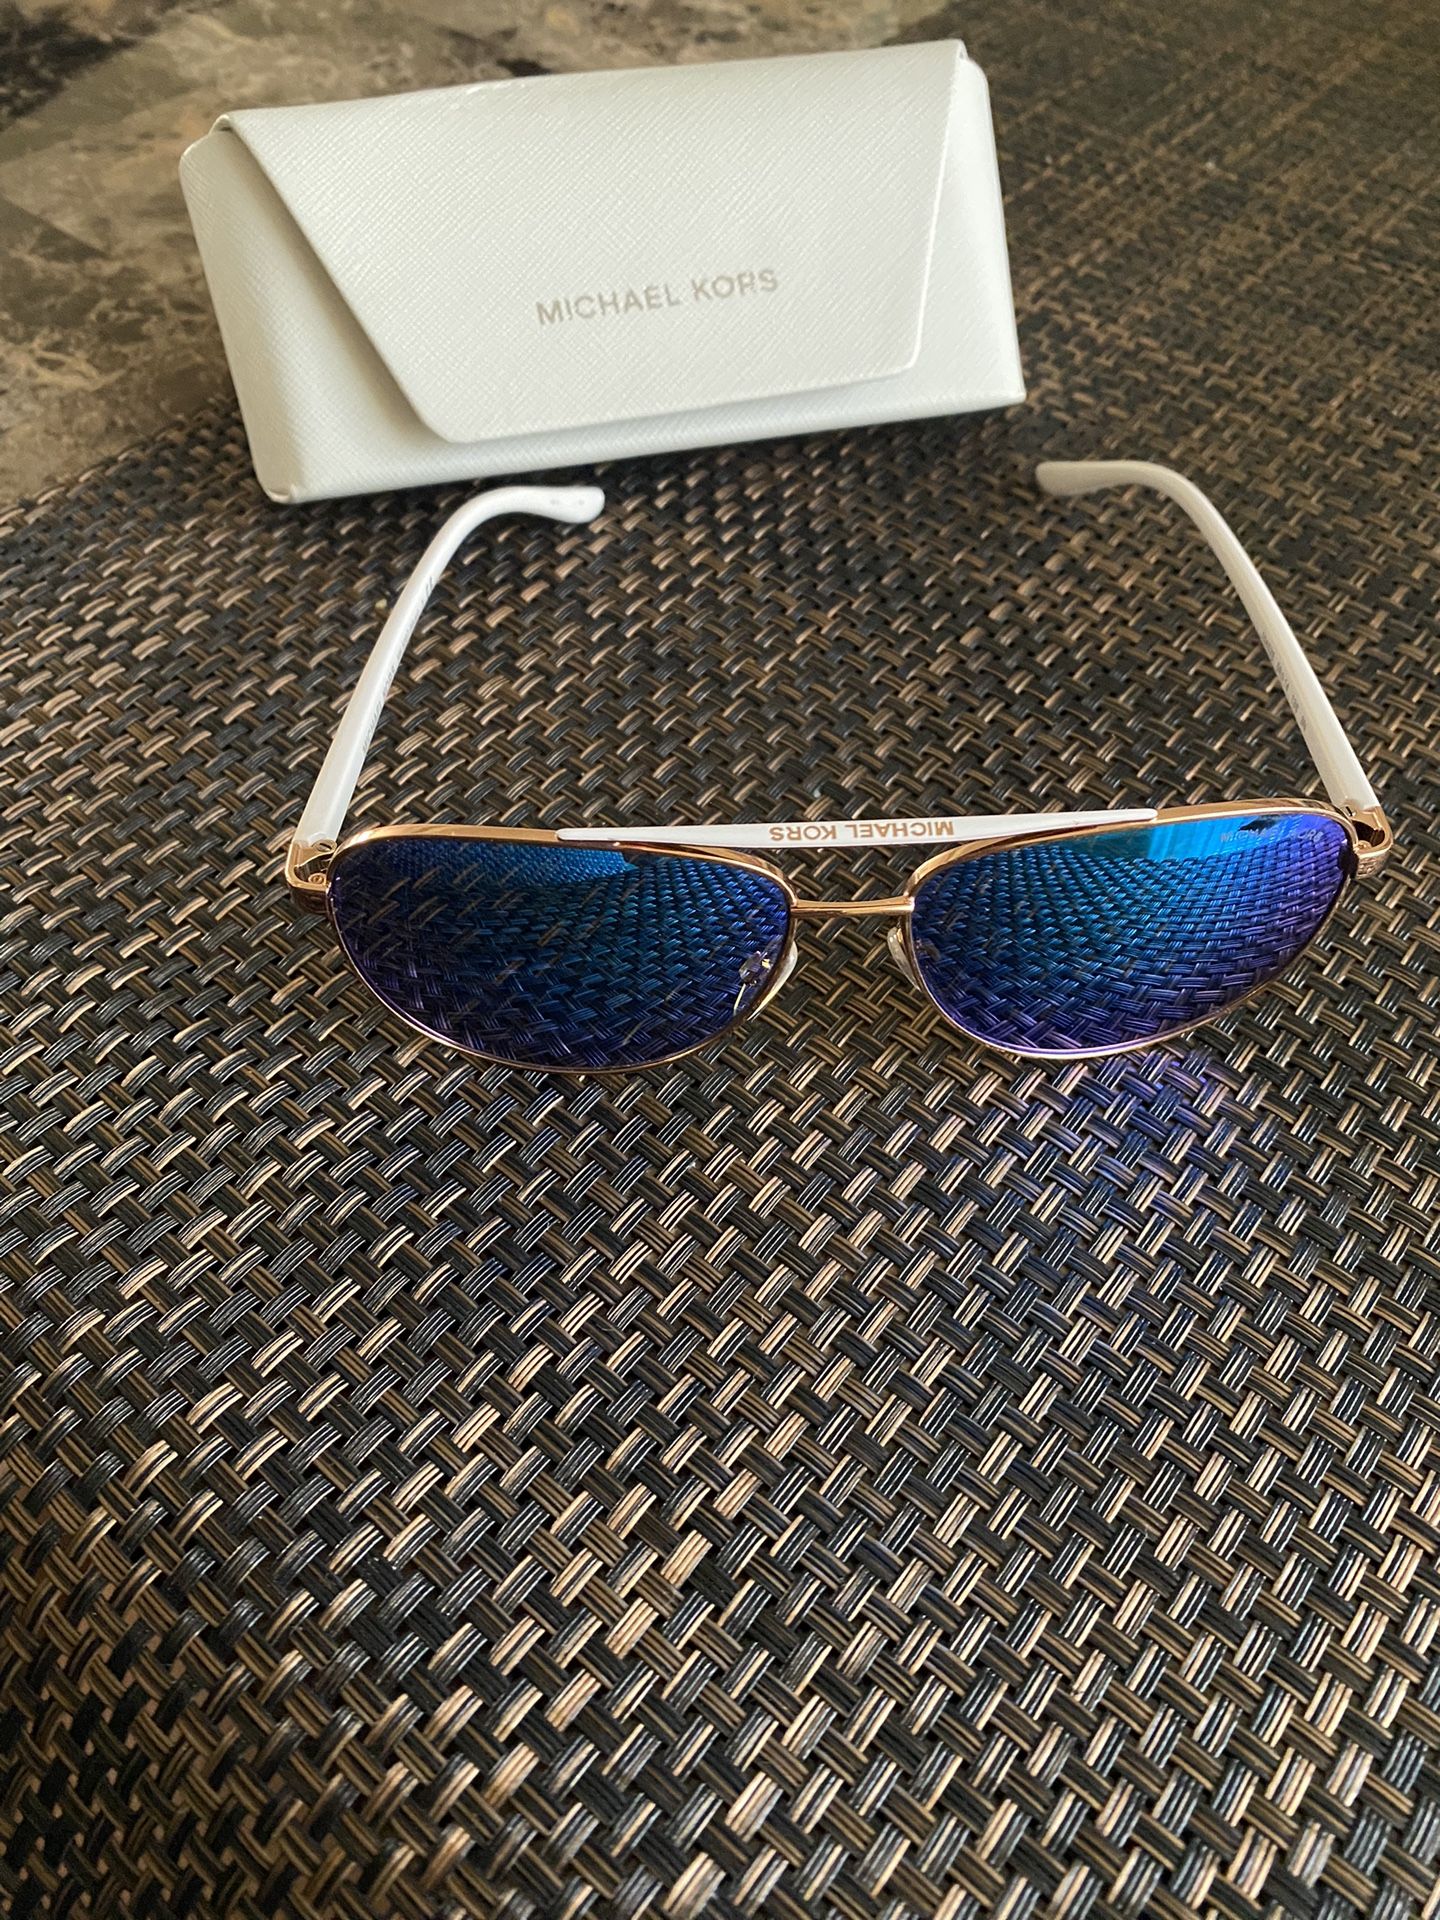 Women’s White And Blue Michael Kors Sunglasses 